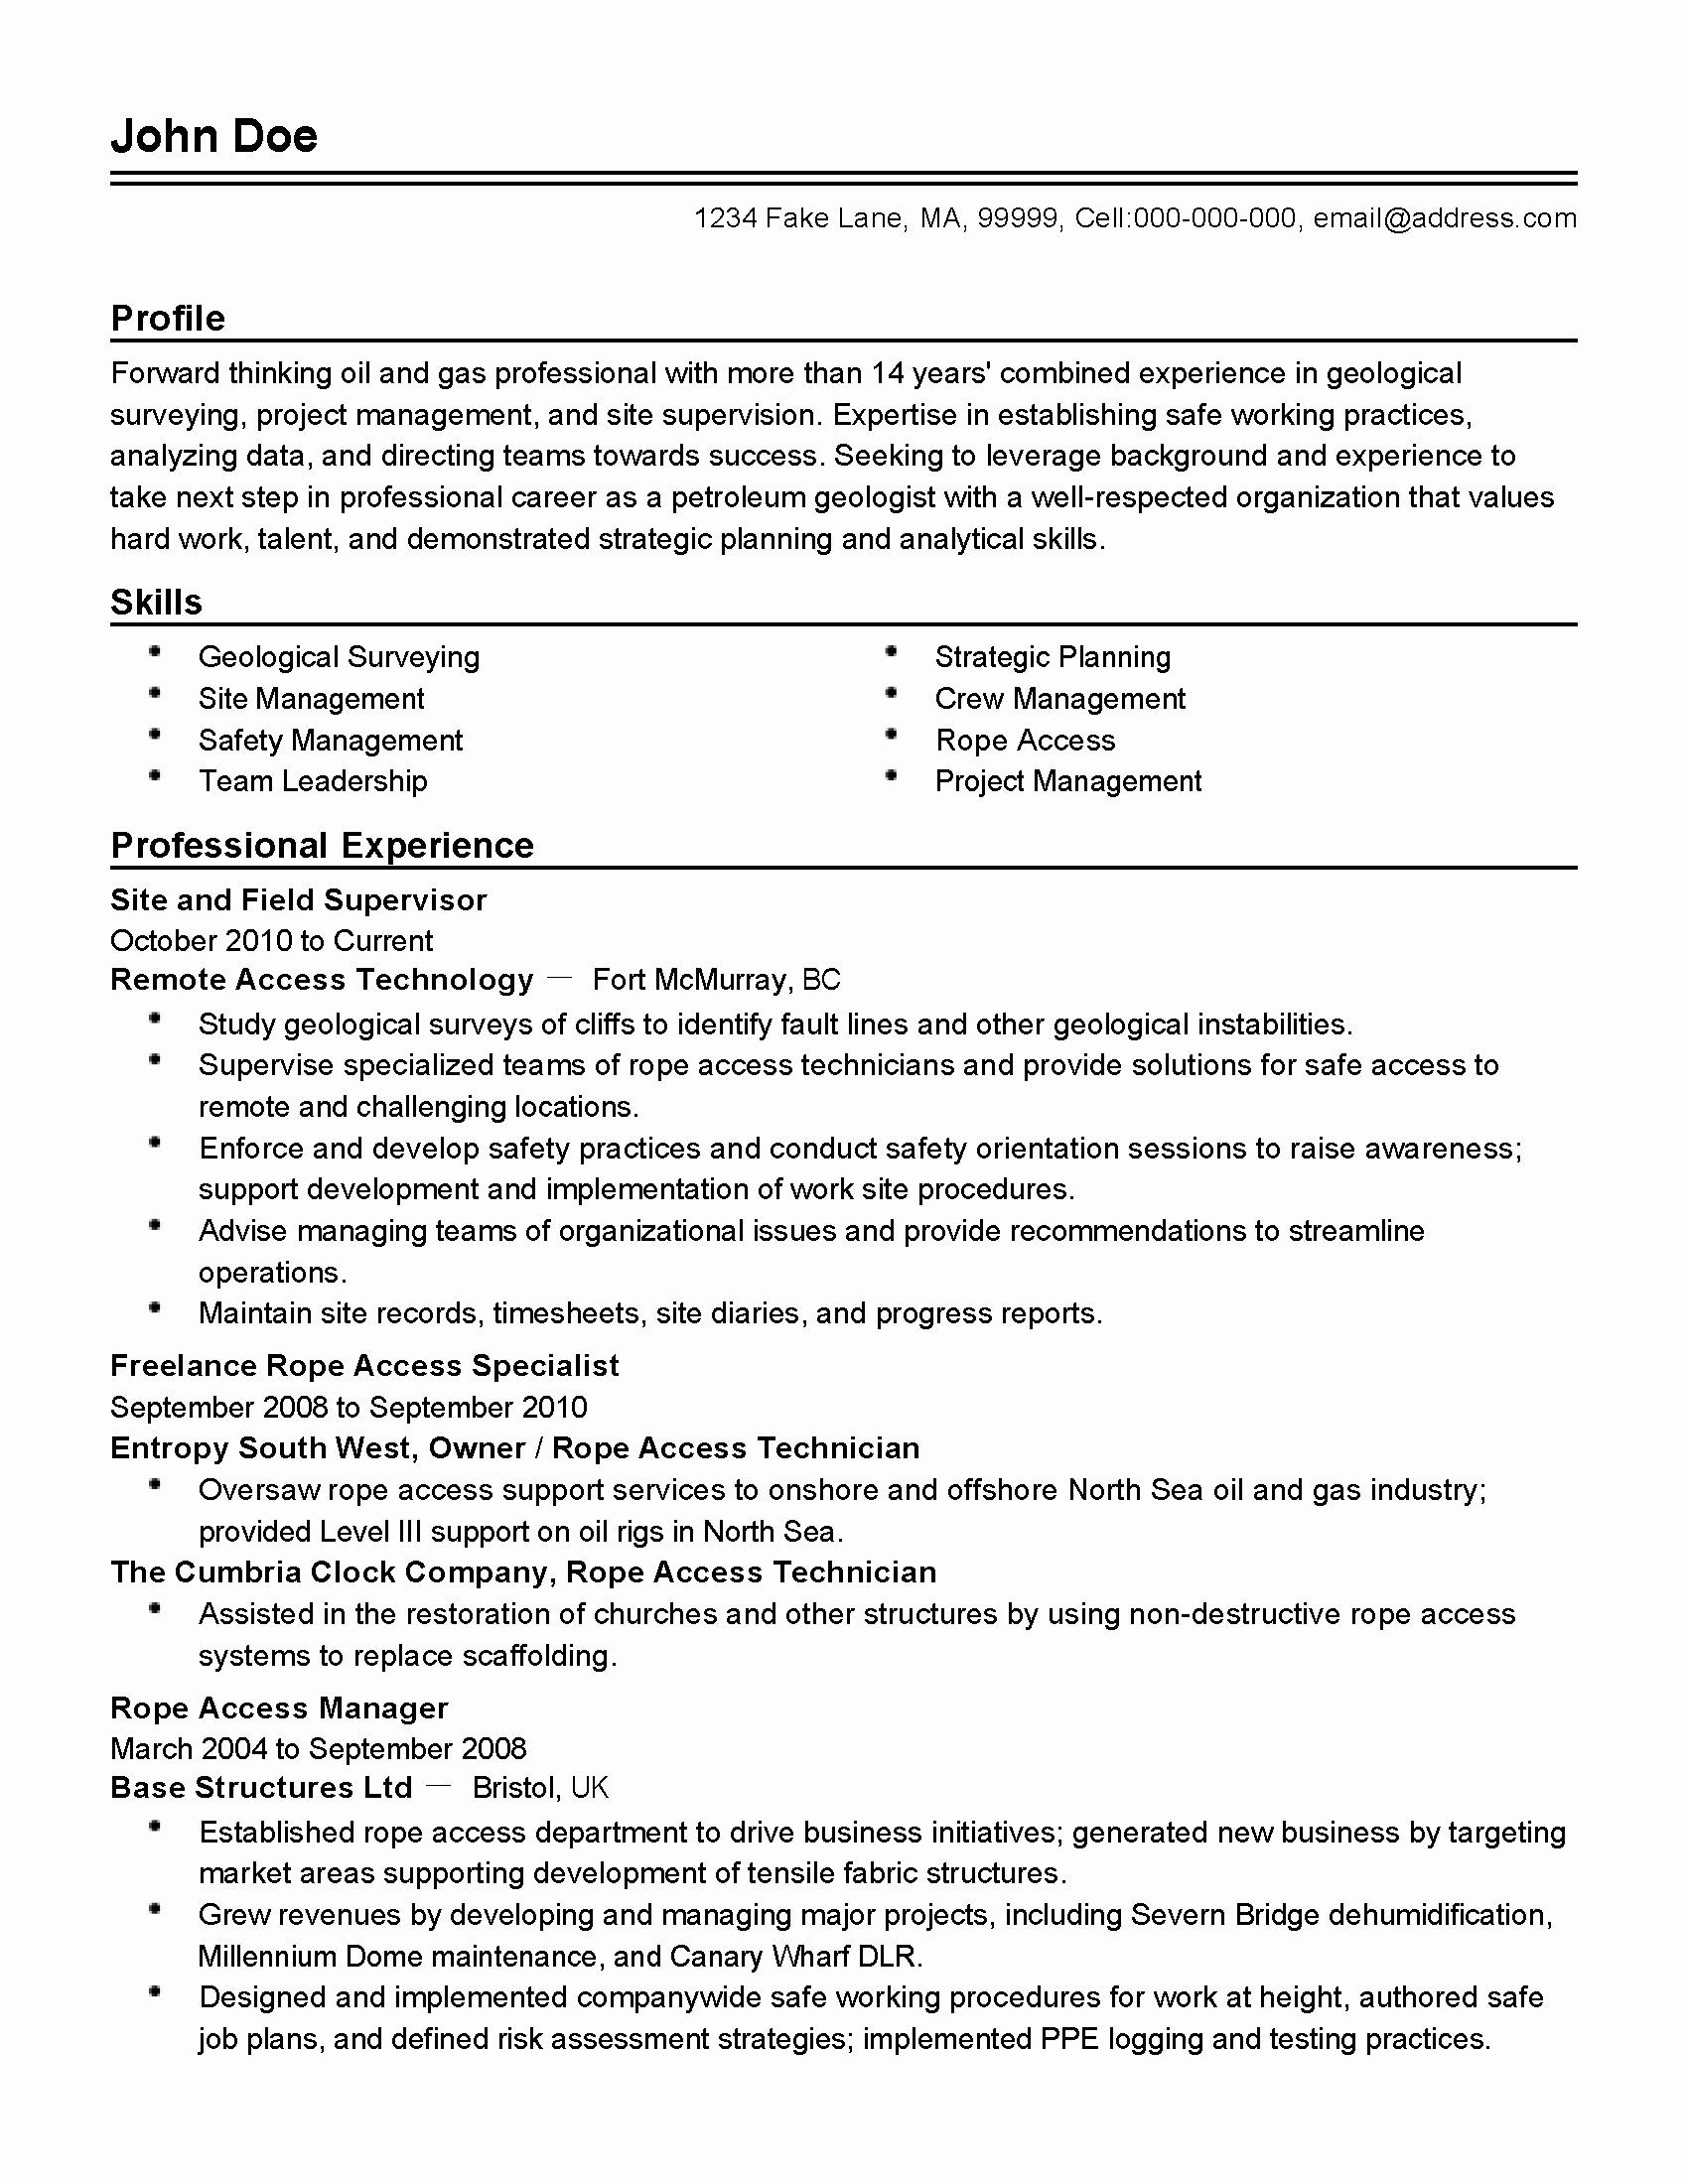 Sample Resume for Oil Field Worker Resume for Oil Field Worker – Shefalitayal